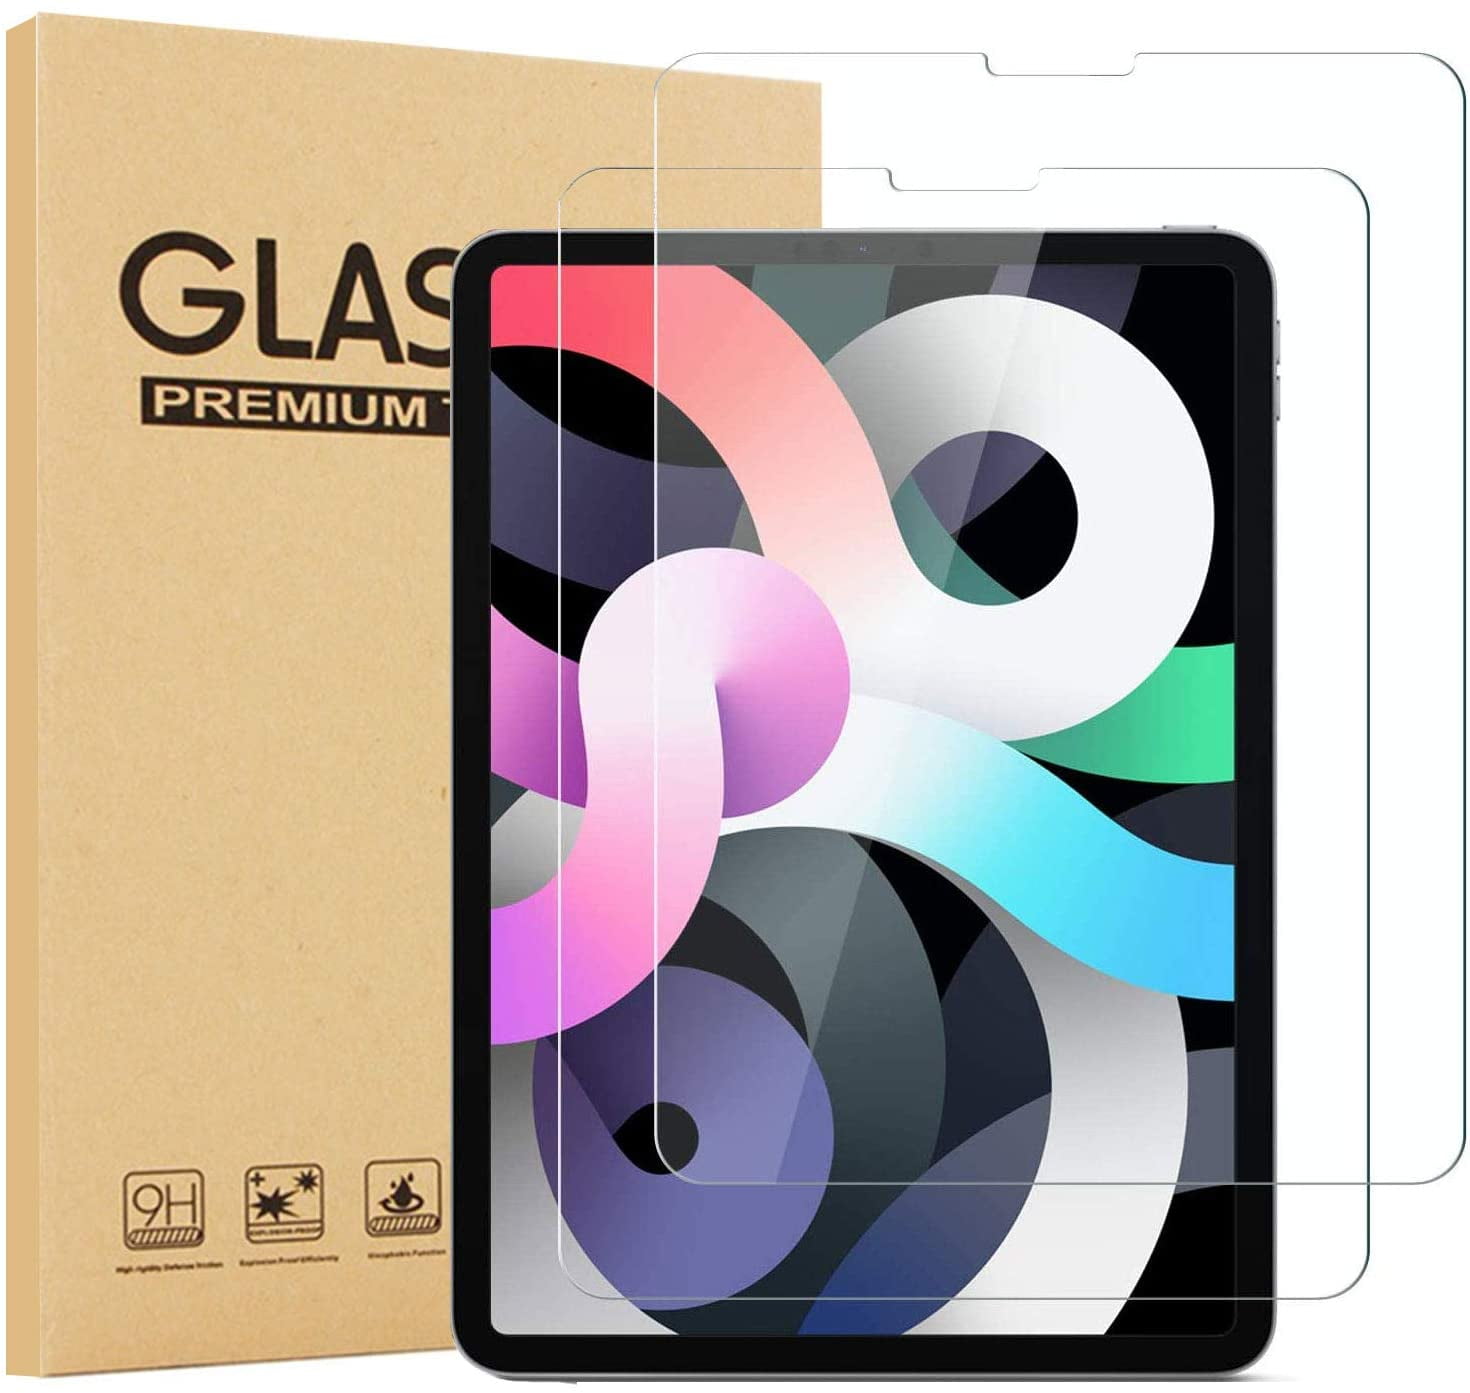 Premium 9H Hardness Anti-Scratch Temper Glass Screen Protector for Apple iPad 